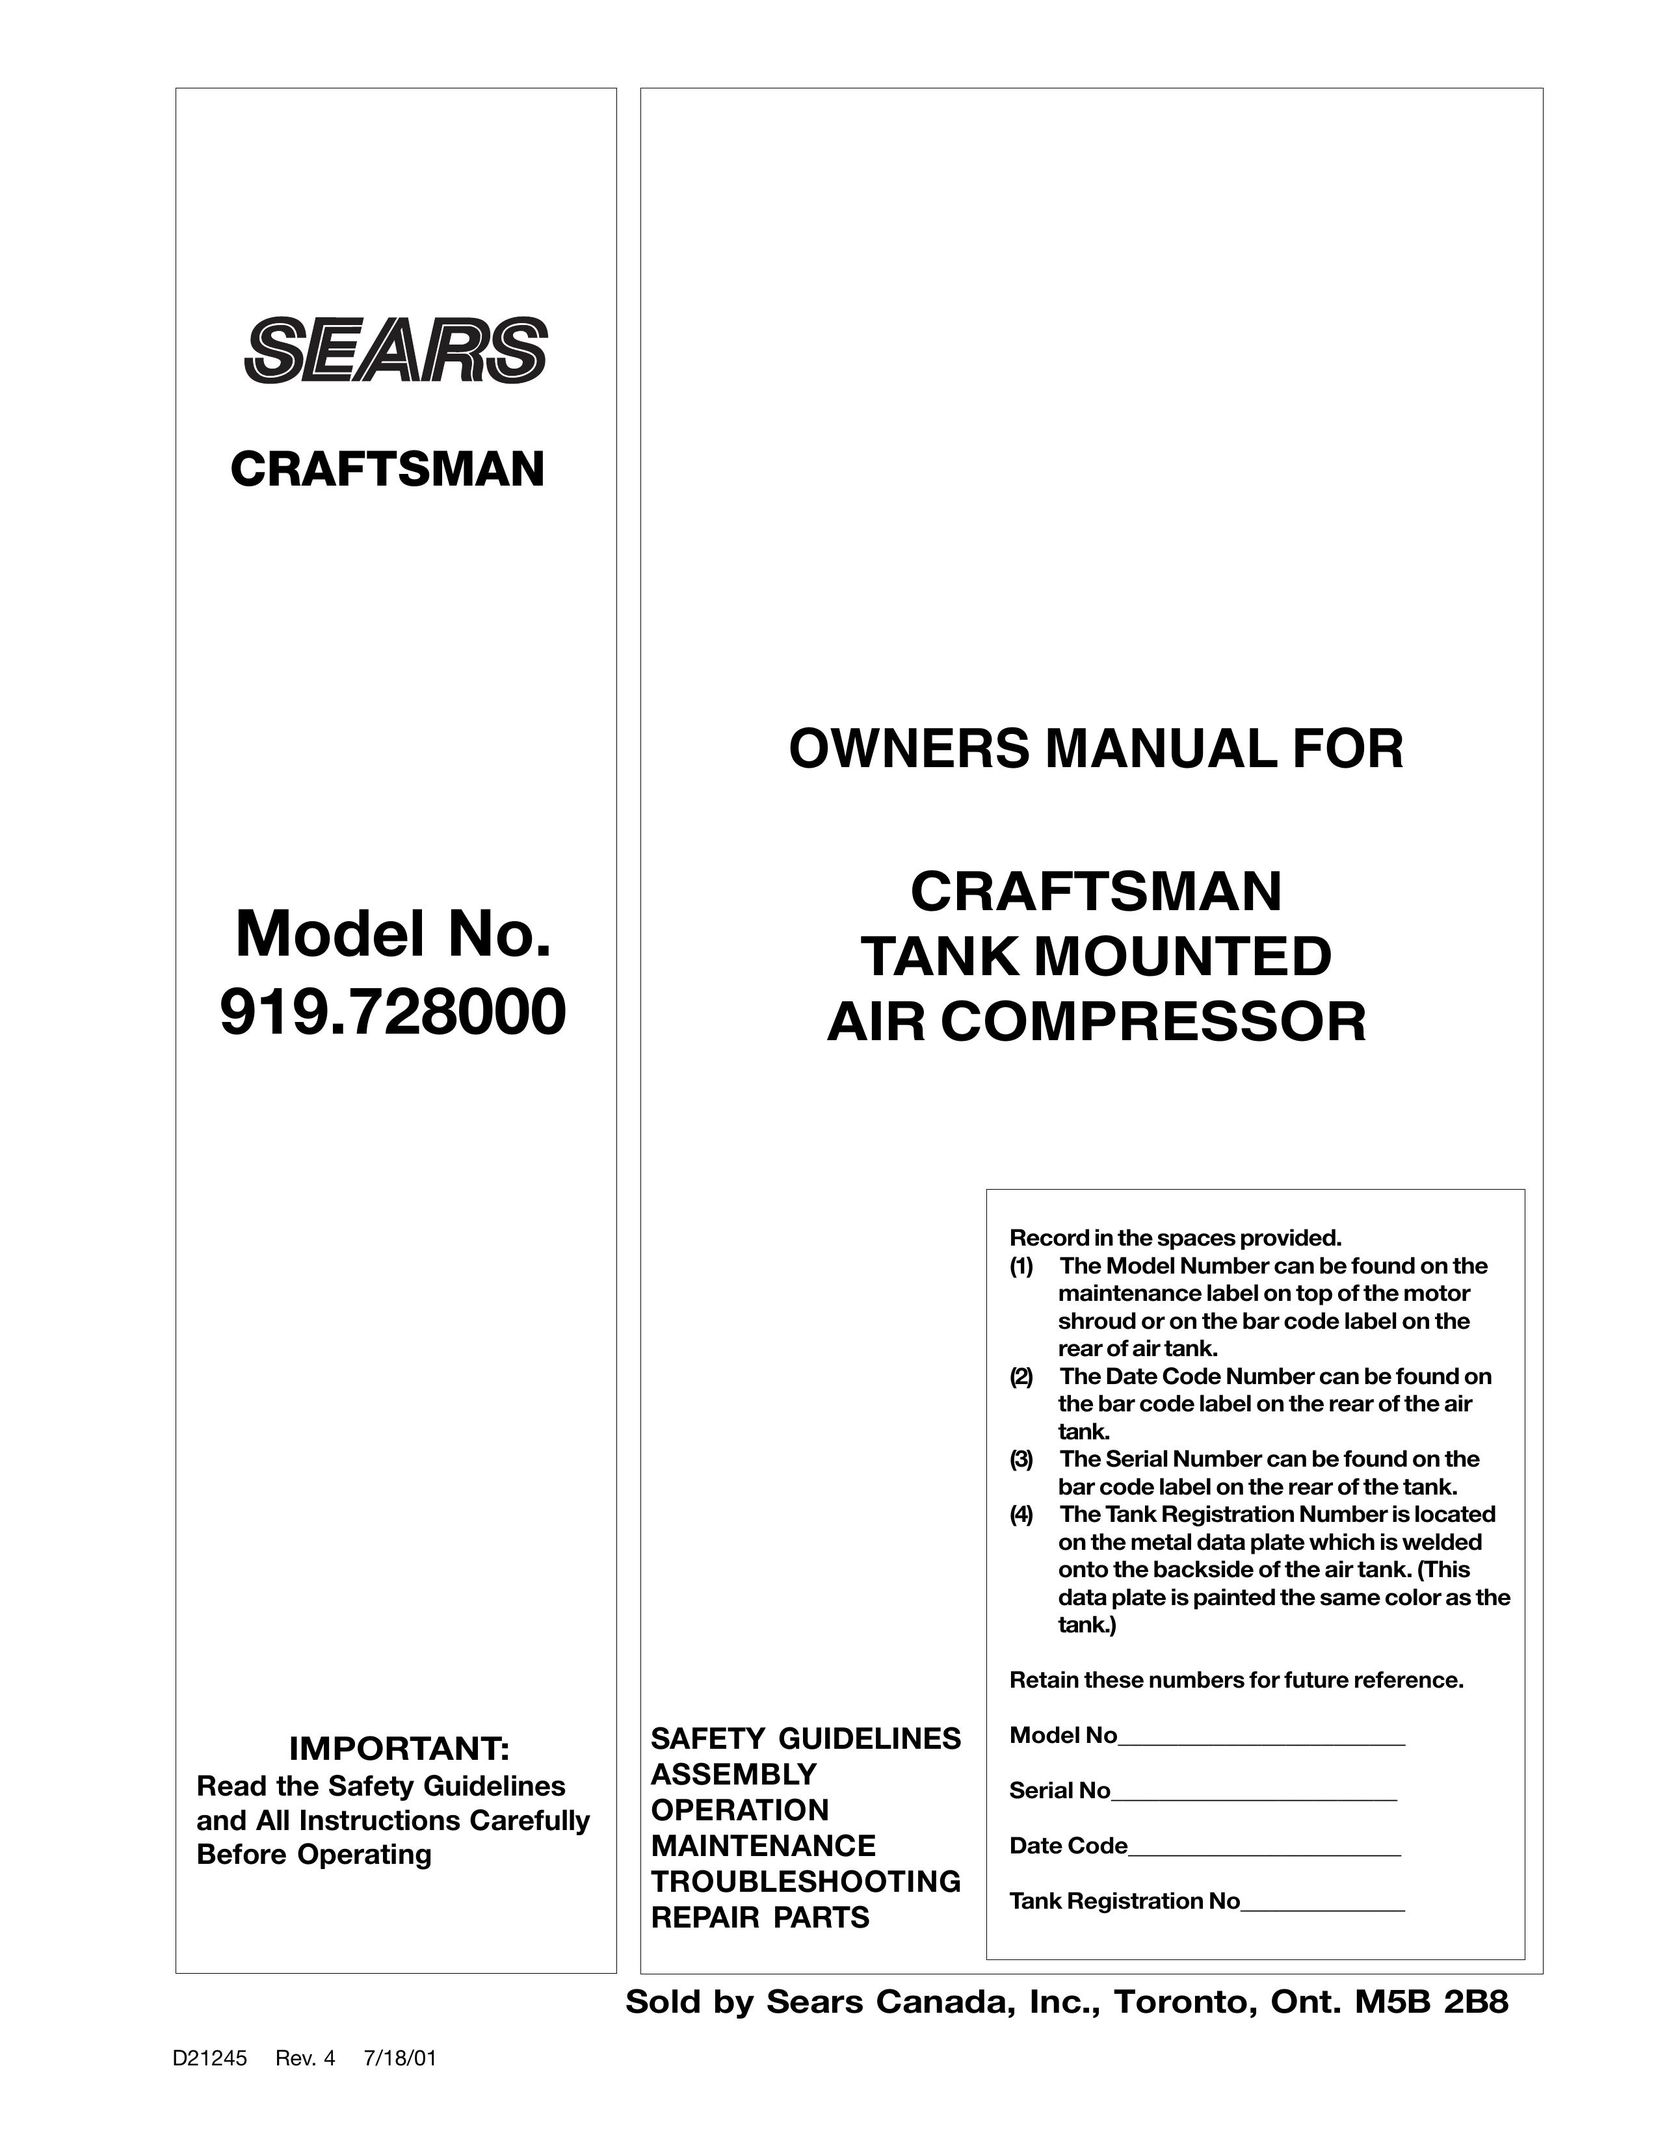 Craftsman 919.728000 Air Compressor User Manual